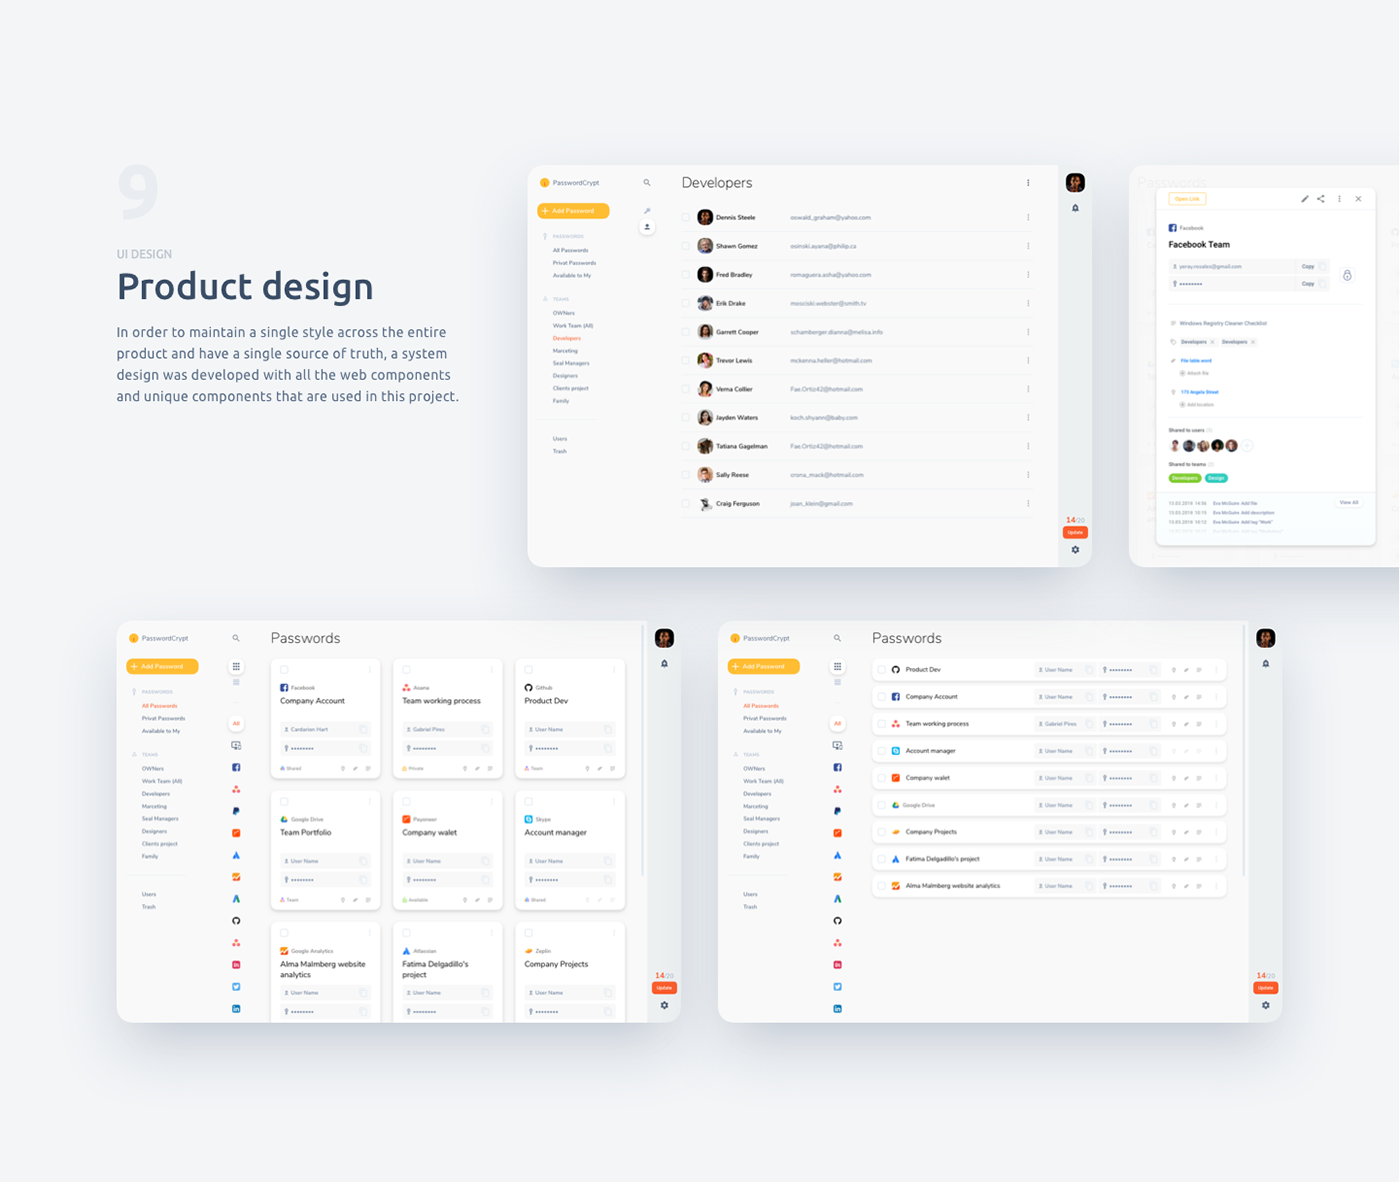 ui sedign product design  SAAS user interface web app Web Design  UI/UX Design user experience design system design process